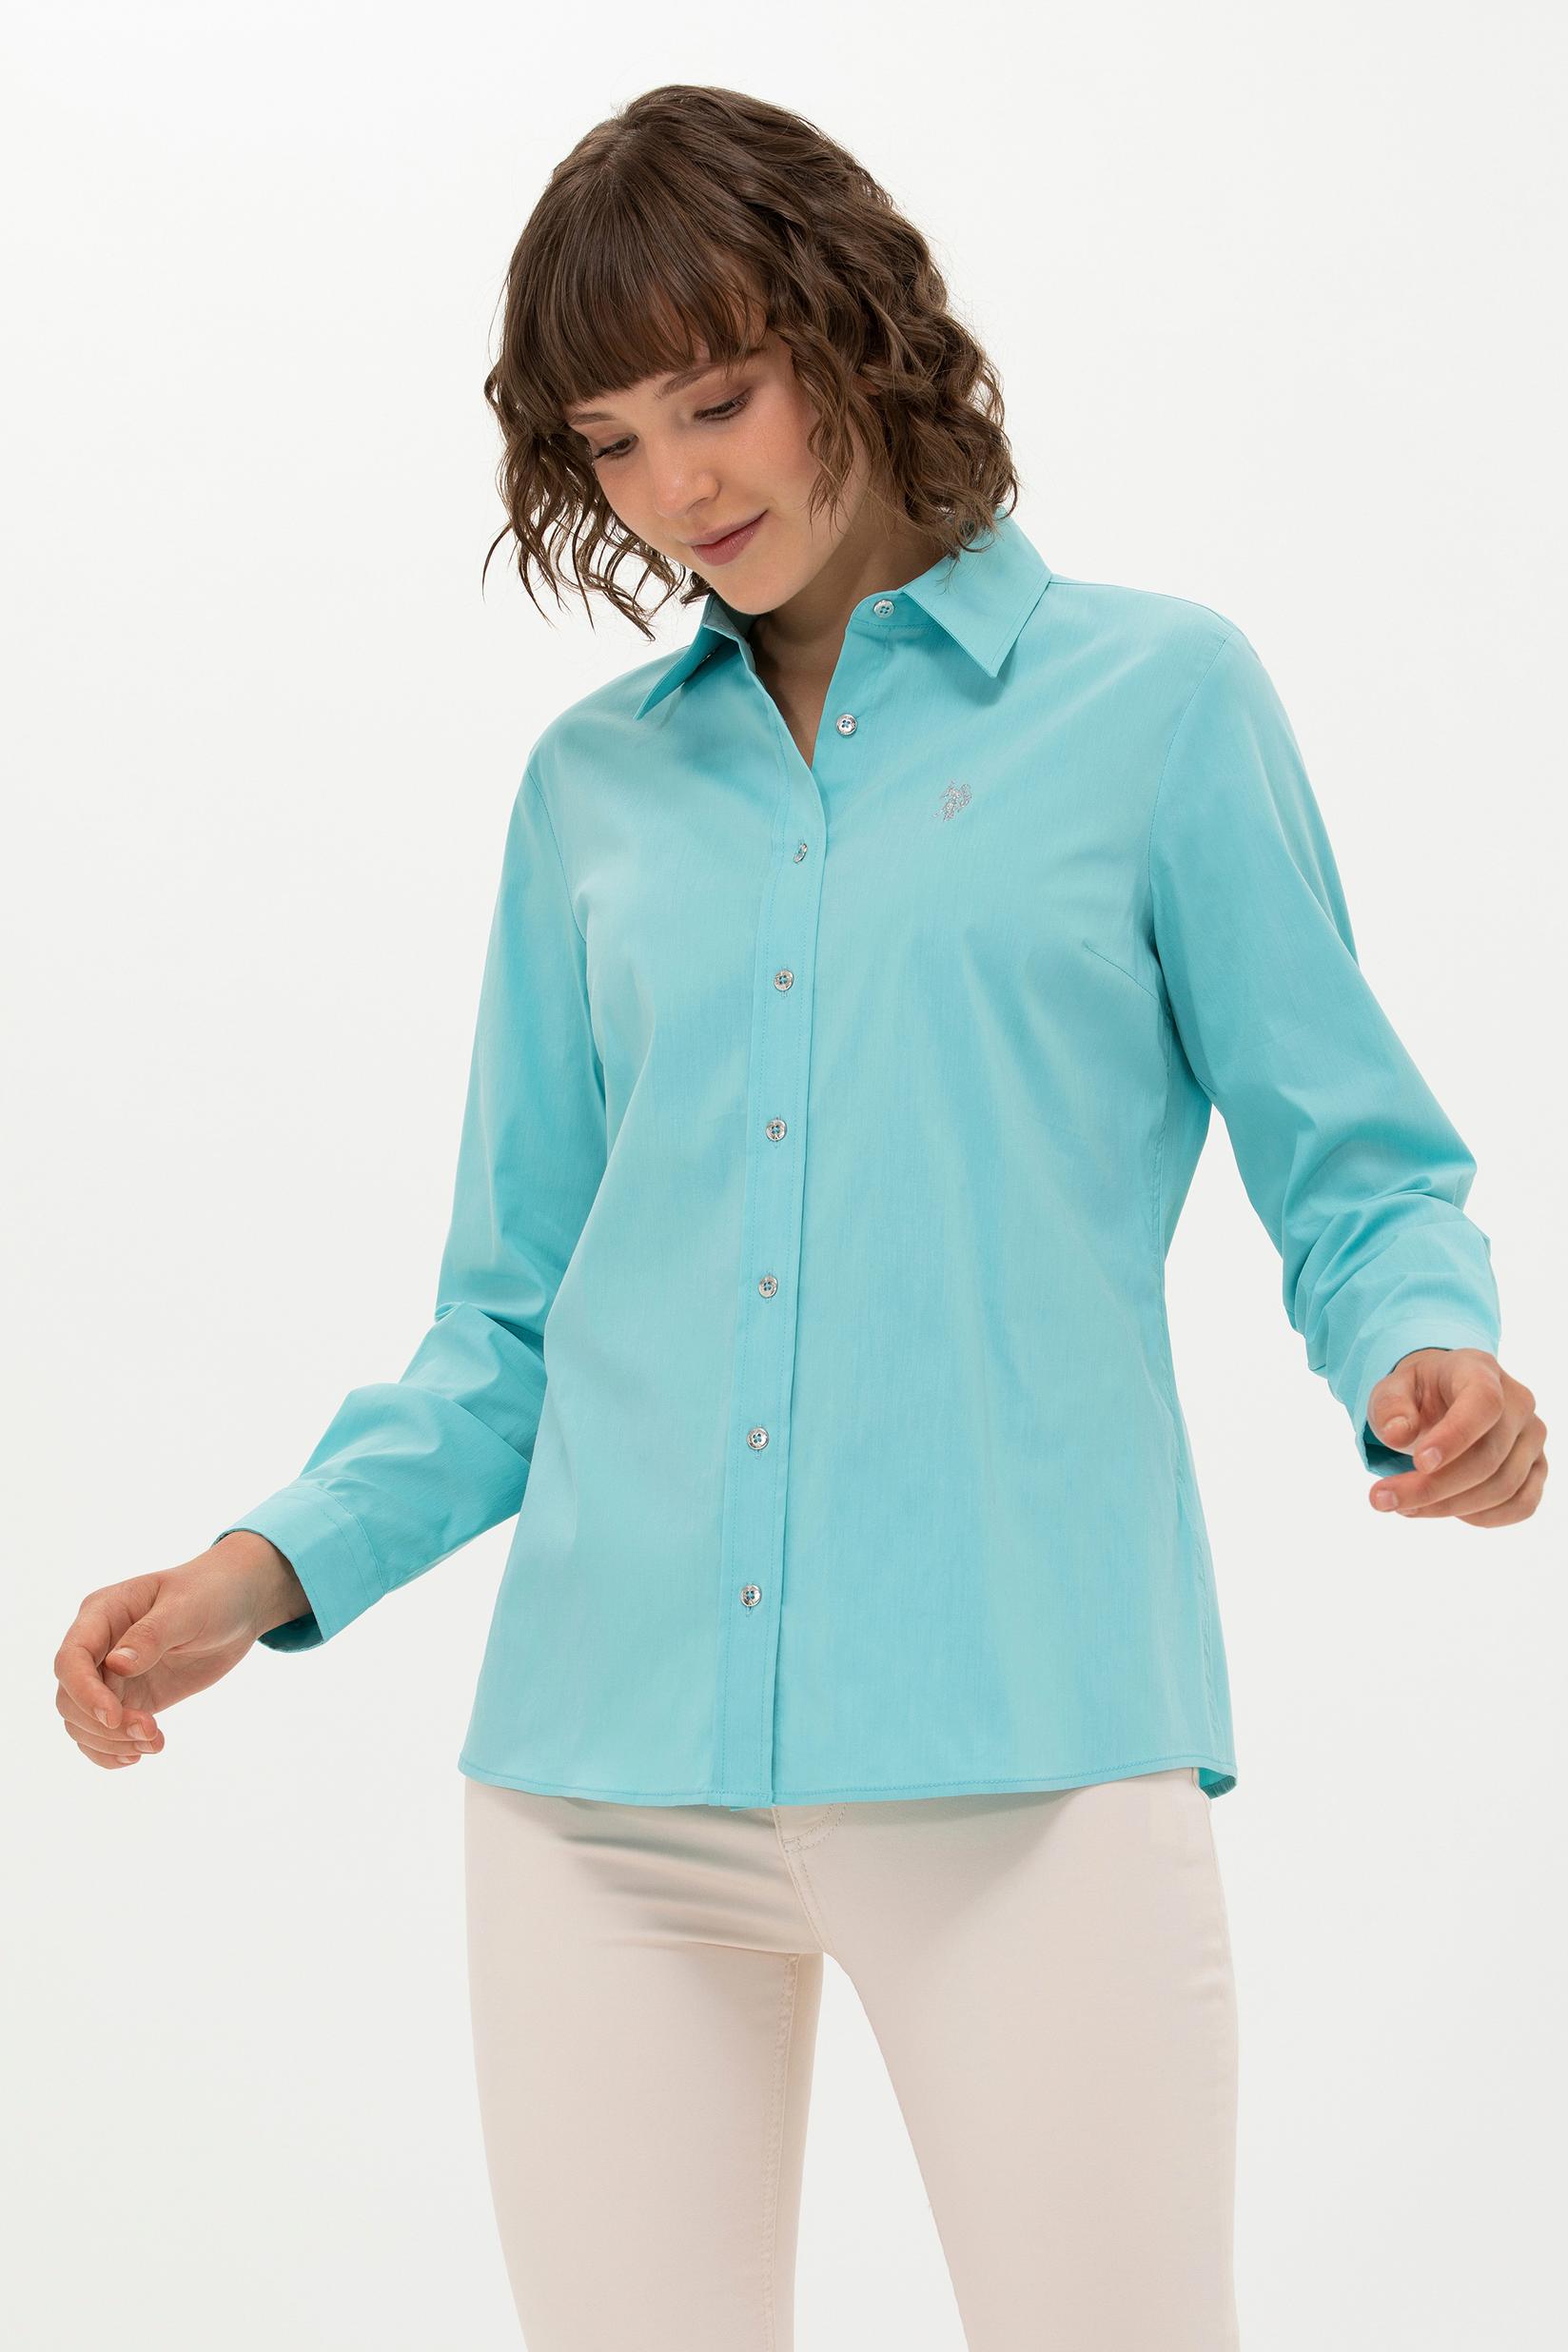 Selected image for U.S. POLO ASSN. Ženska košulja Basic svetloplava